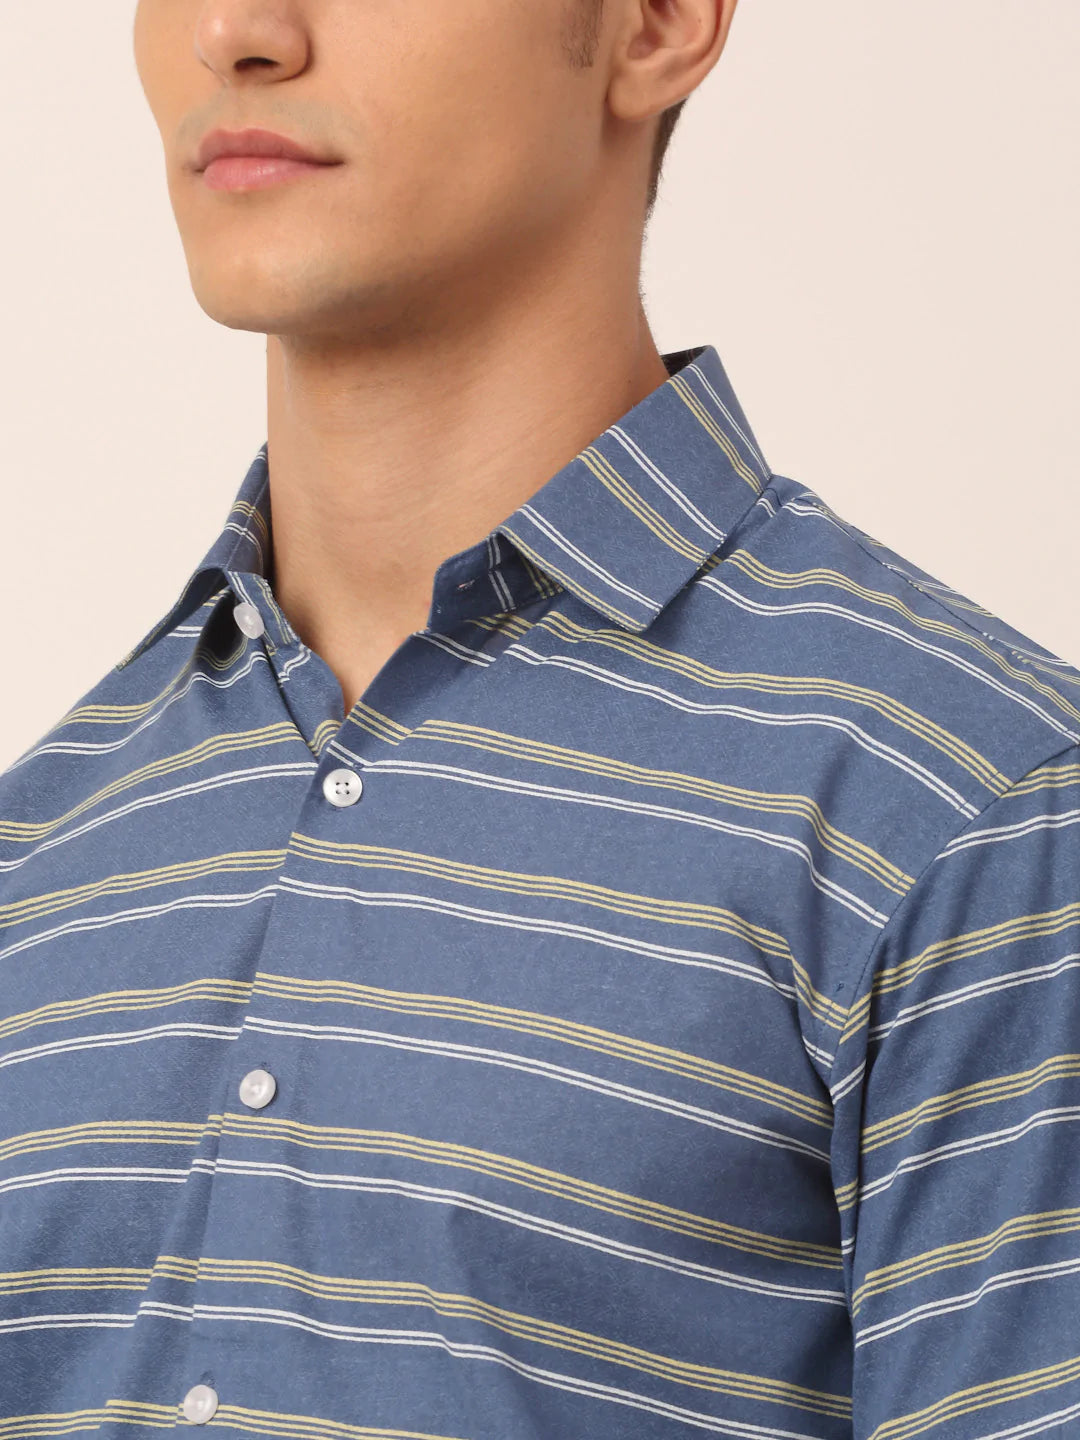 Jainish Men's Cotton Striped Half Sleeve Formal Shirts ( SF 816Blue )